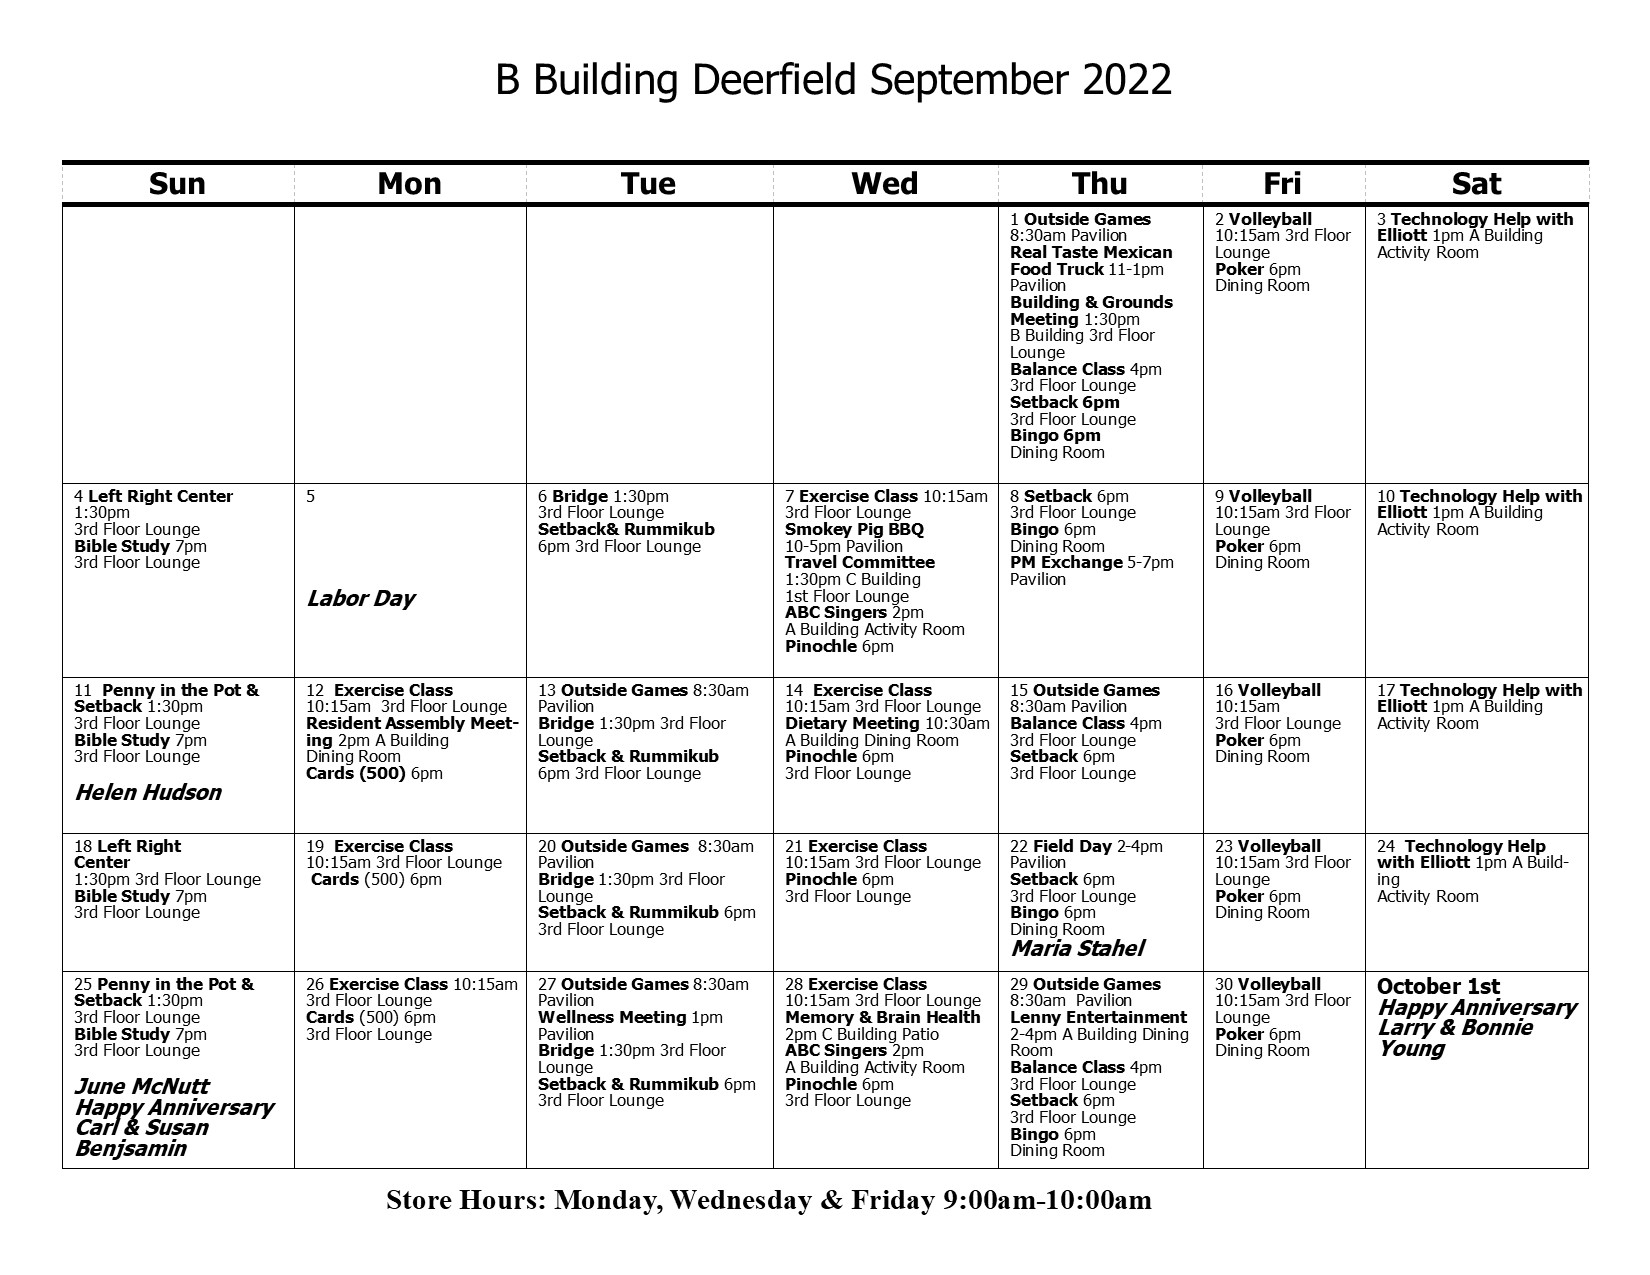 B Building Calendar September 2022